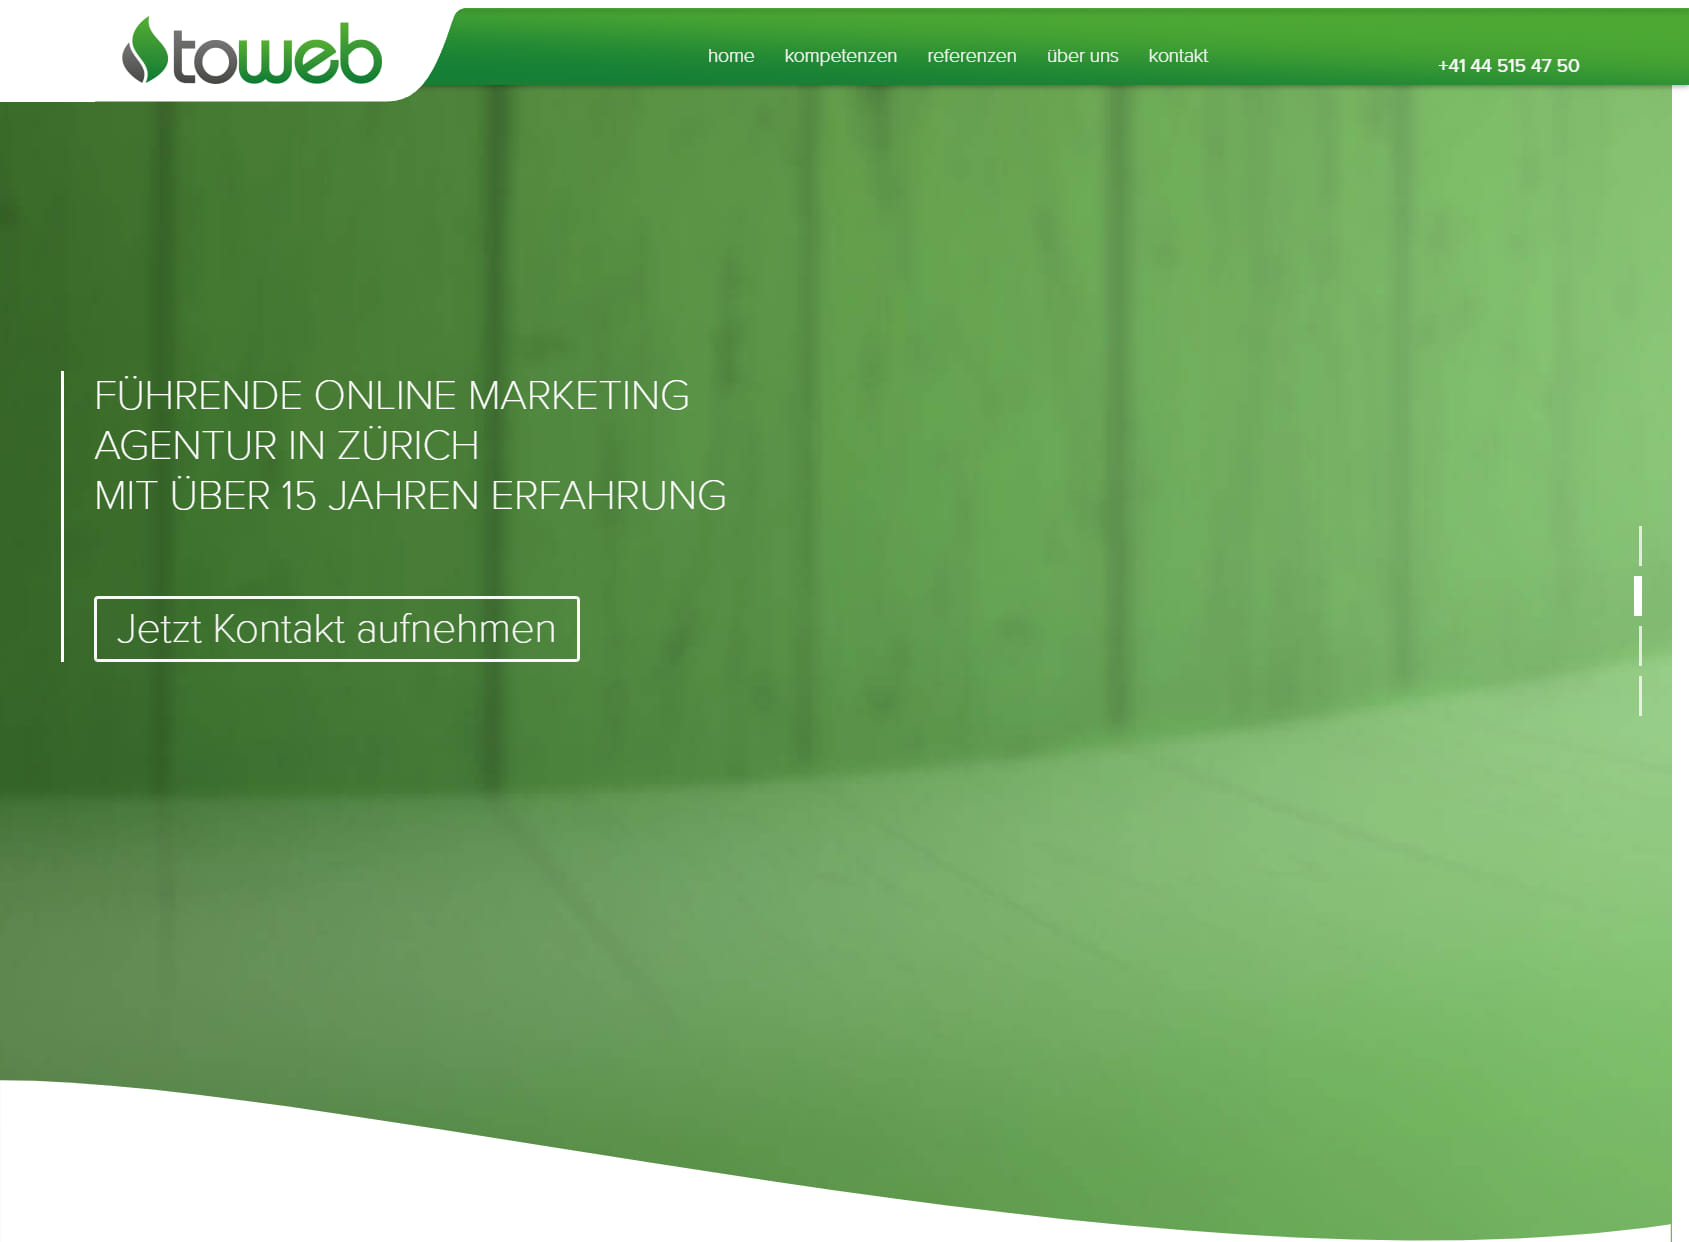 toweb GmbH